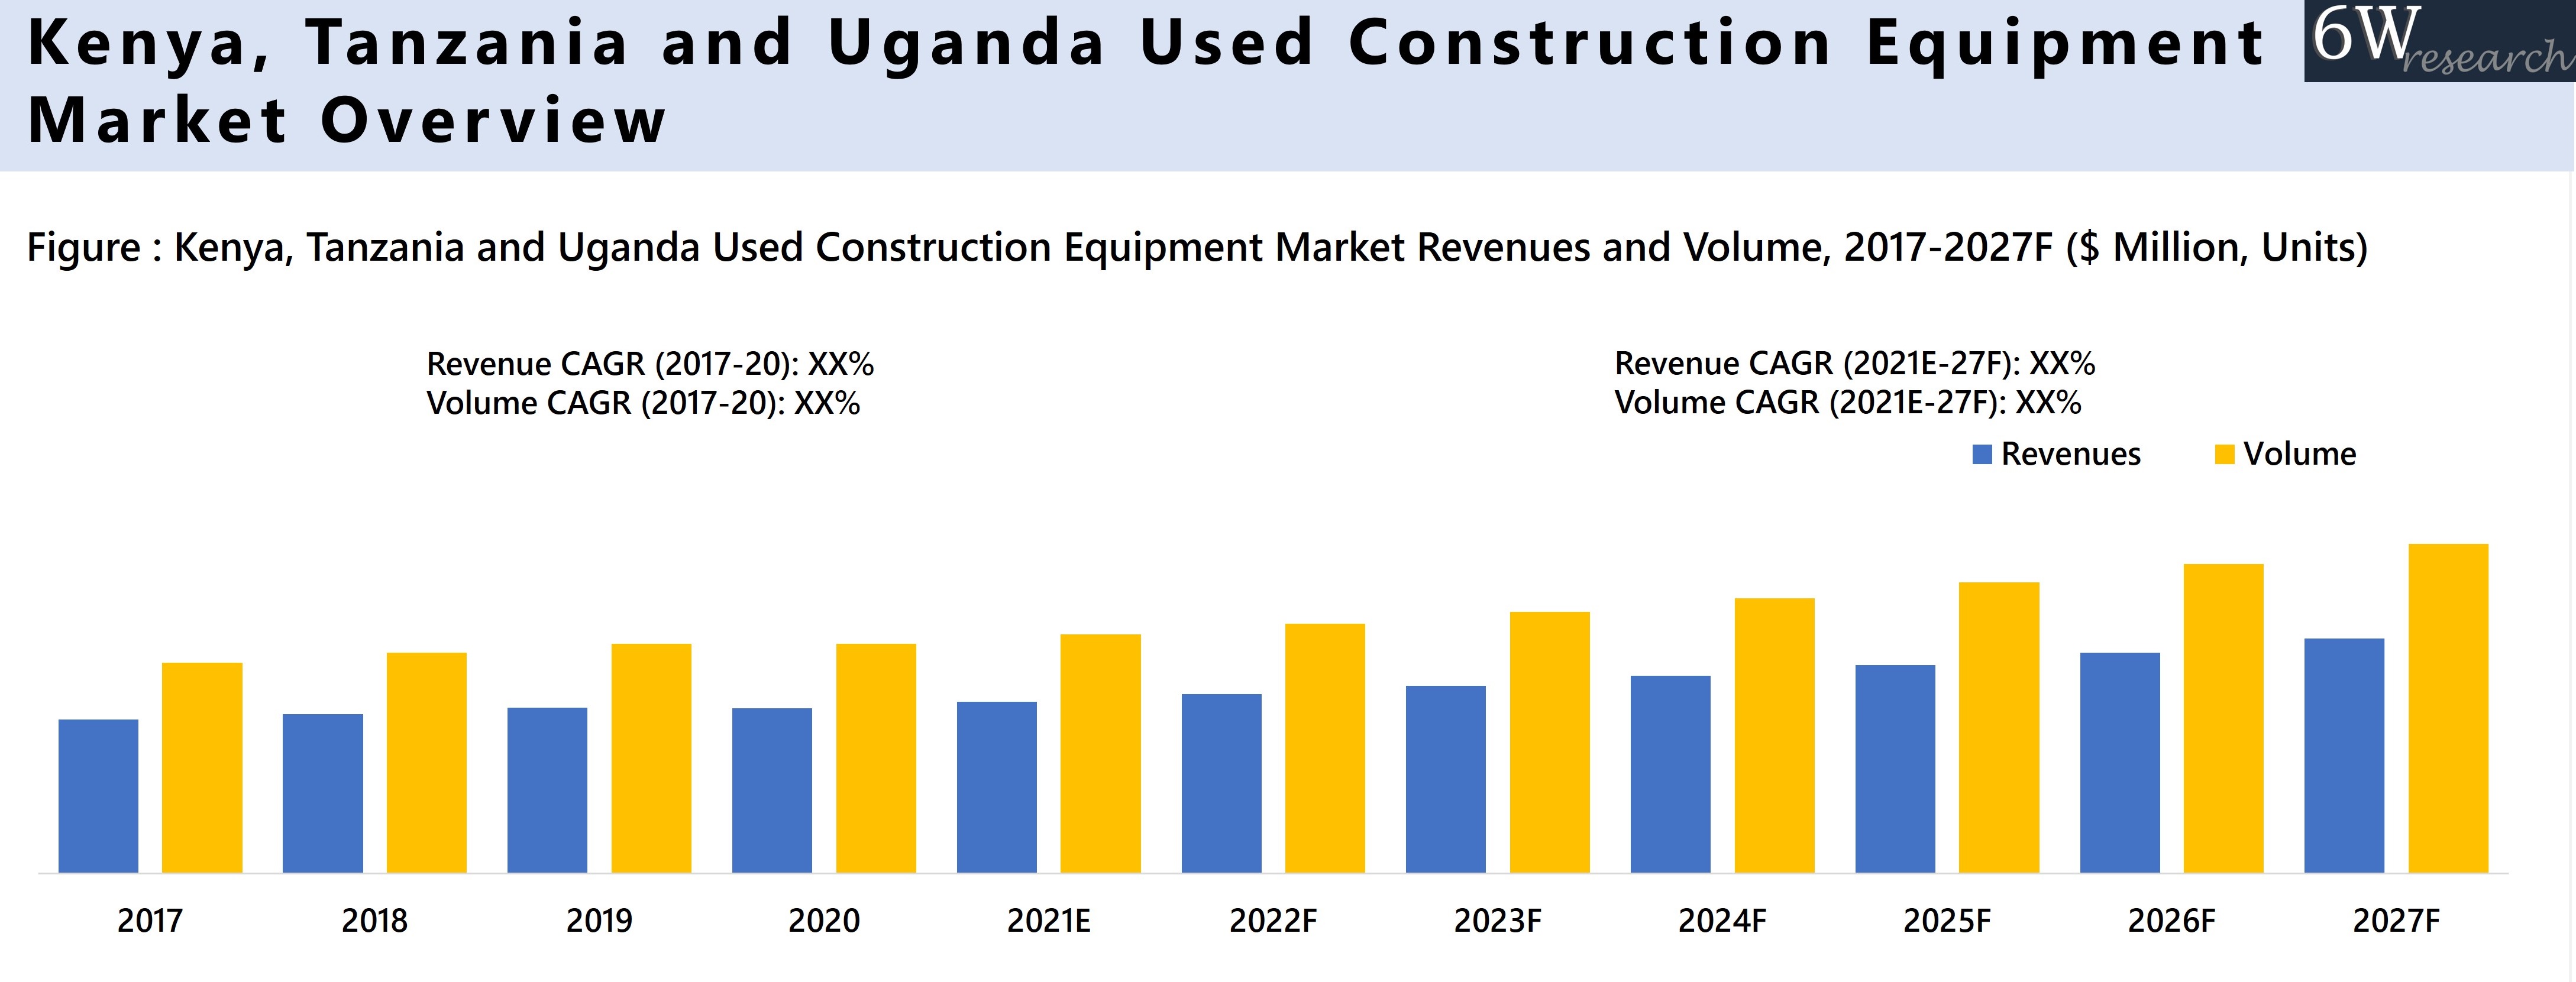 Kenya, Tanzania and Uganda Used Construction Equipment Market Overview